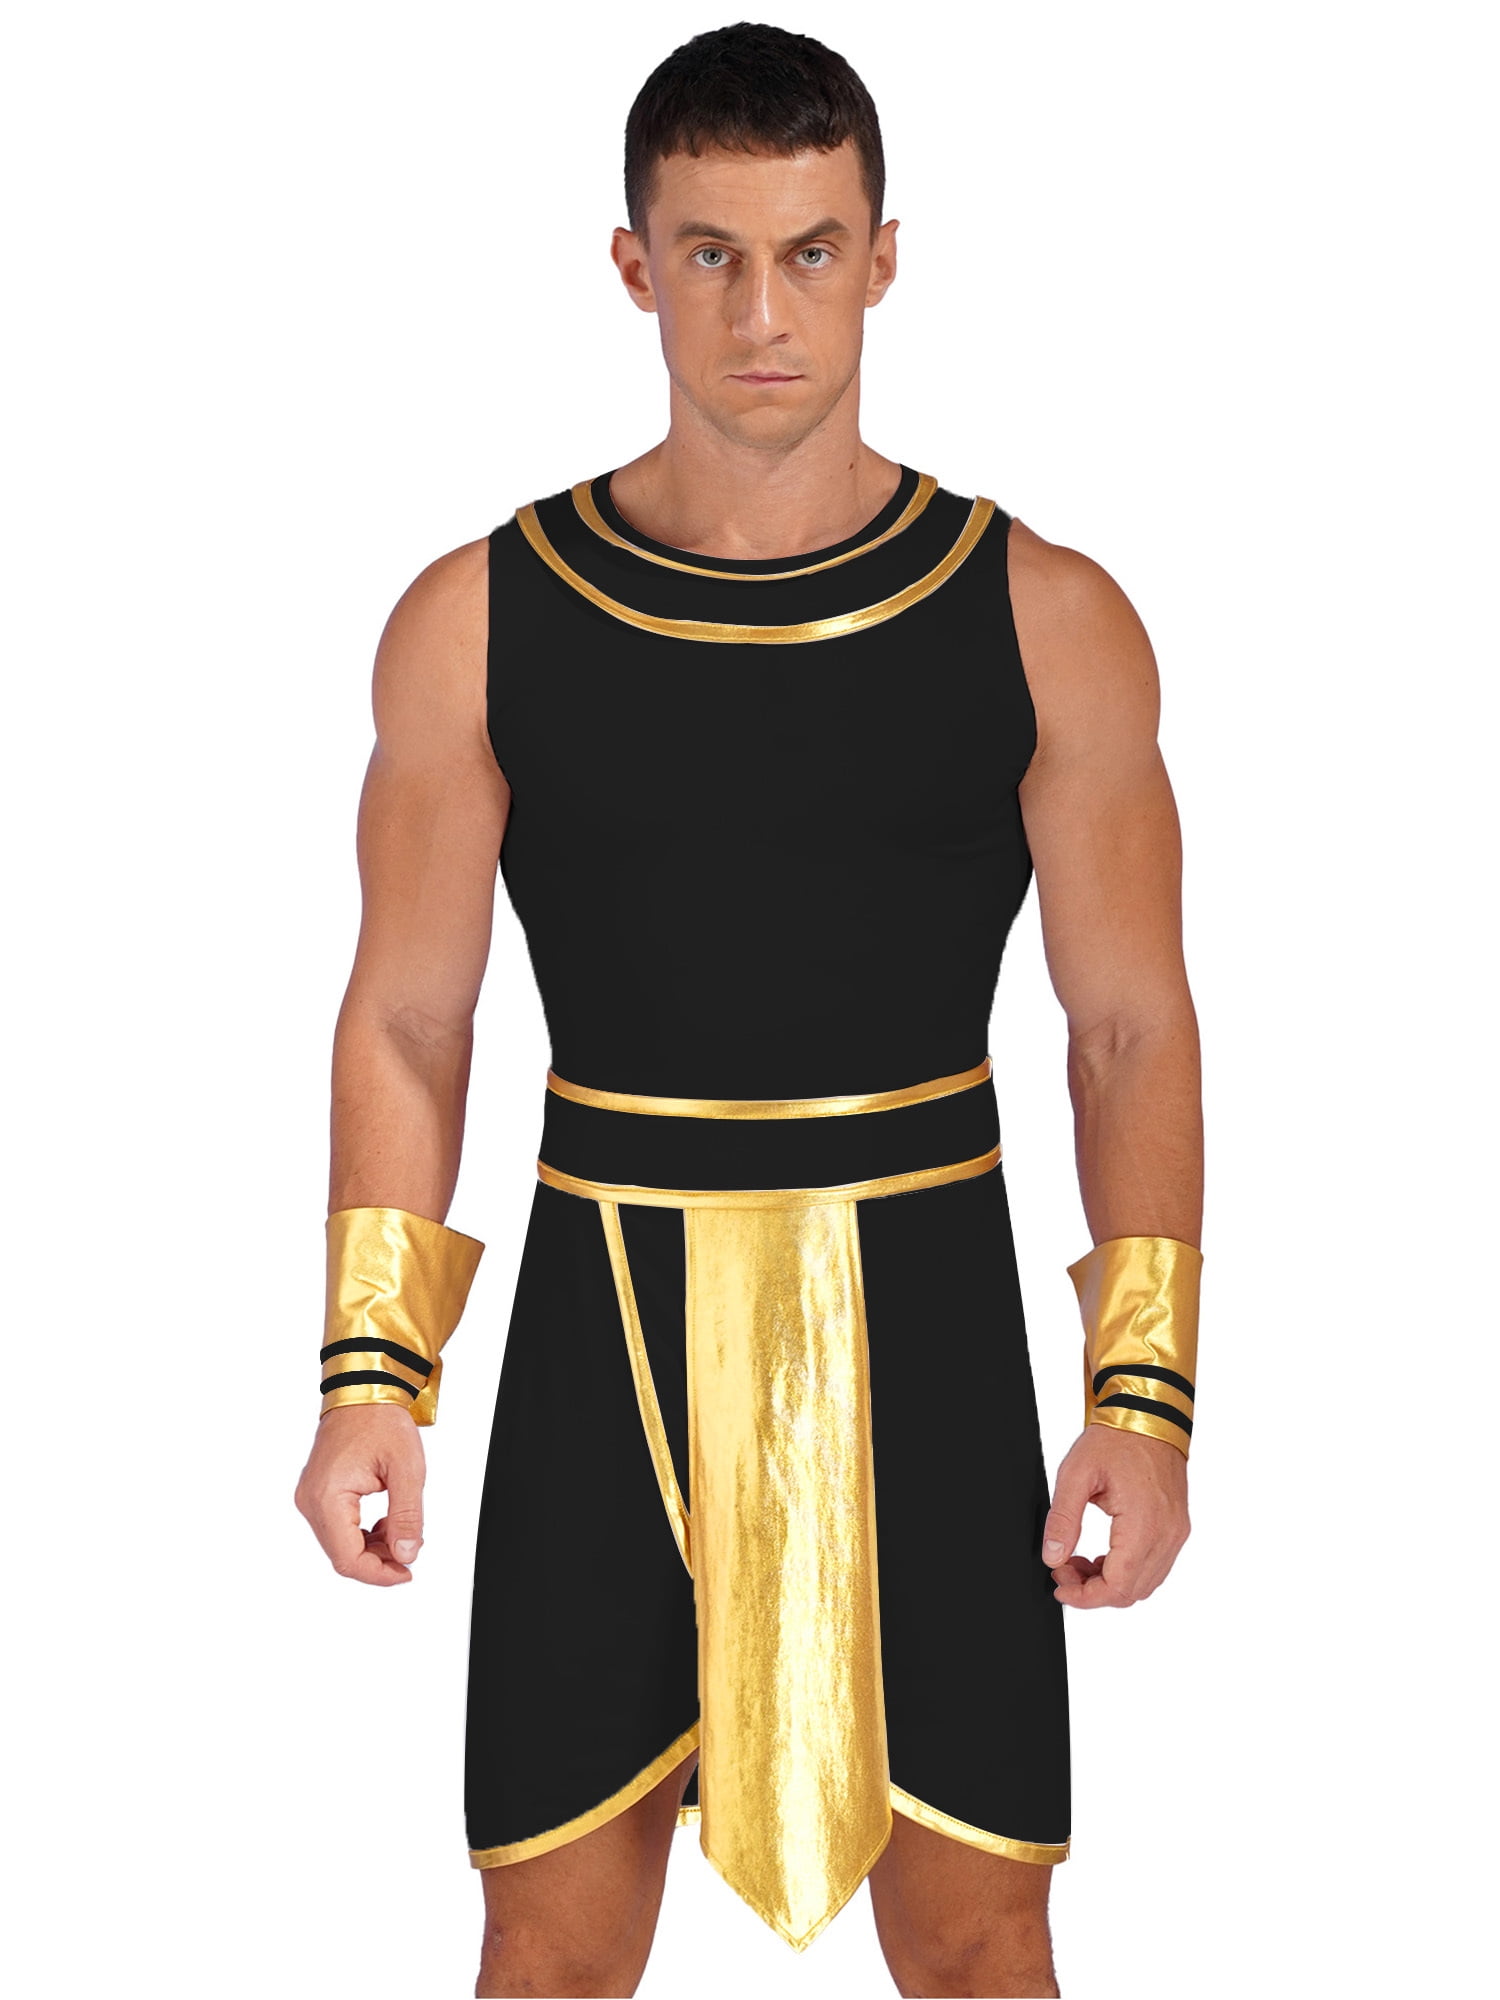 inhzoy Mens 3PCs Mens Ancient Egypt Greek Gladiator Warrior Cosplay Outfits  Burgundy S 